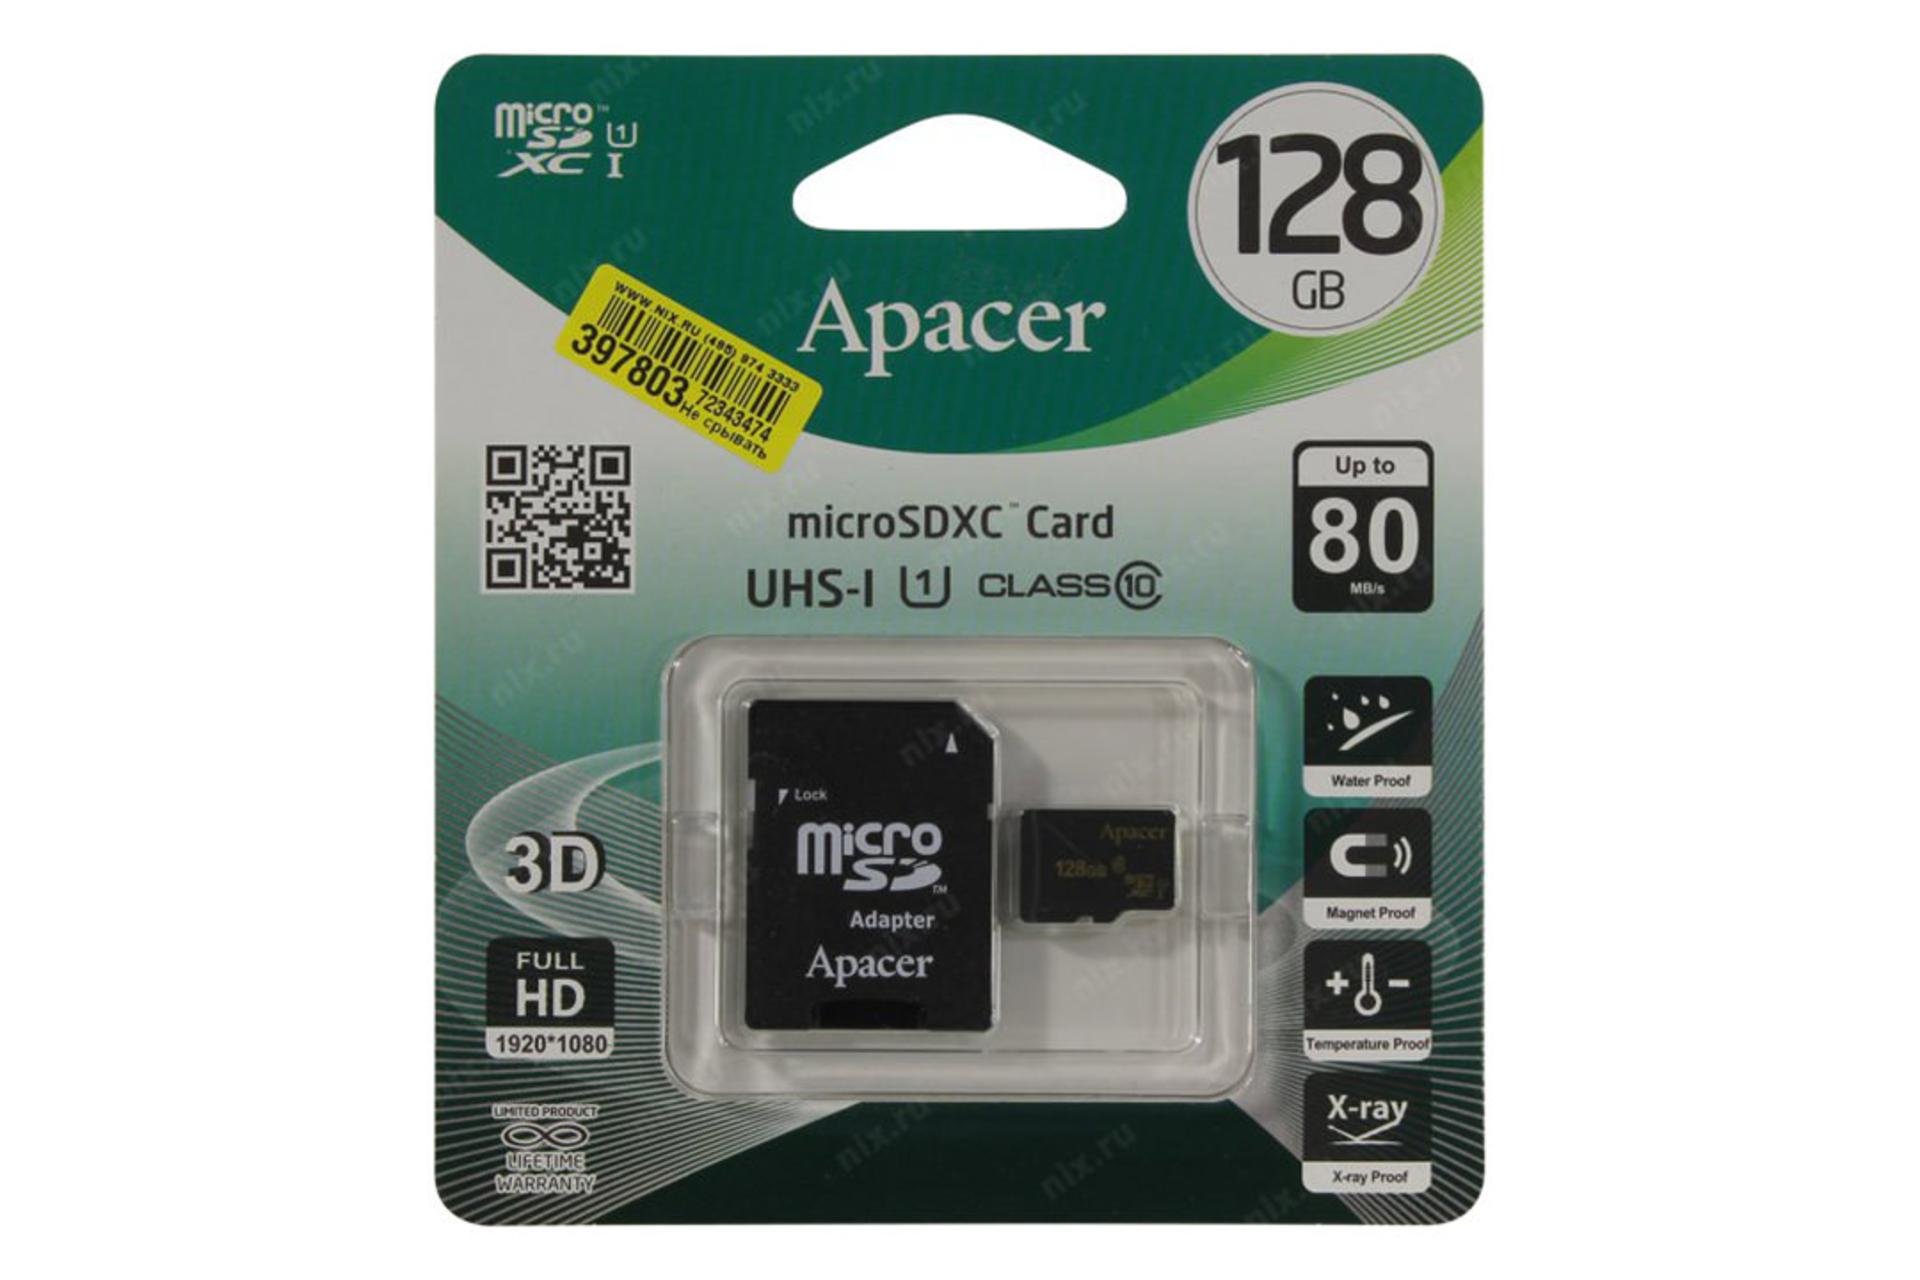 Apacer microSDXC Class 10 UHS-I U1 128GB